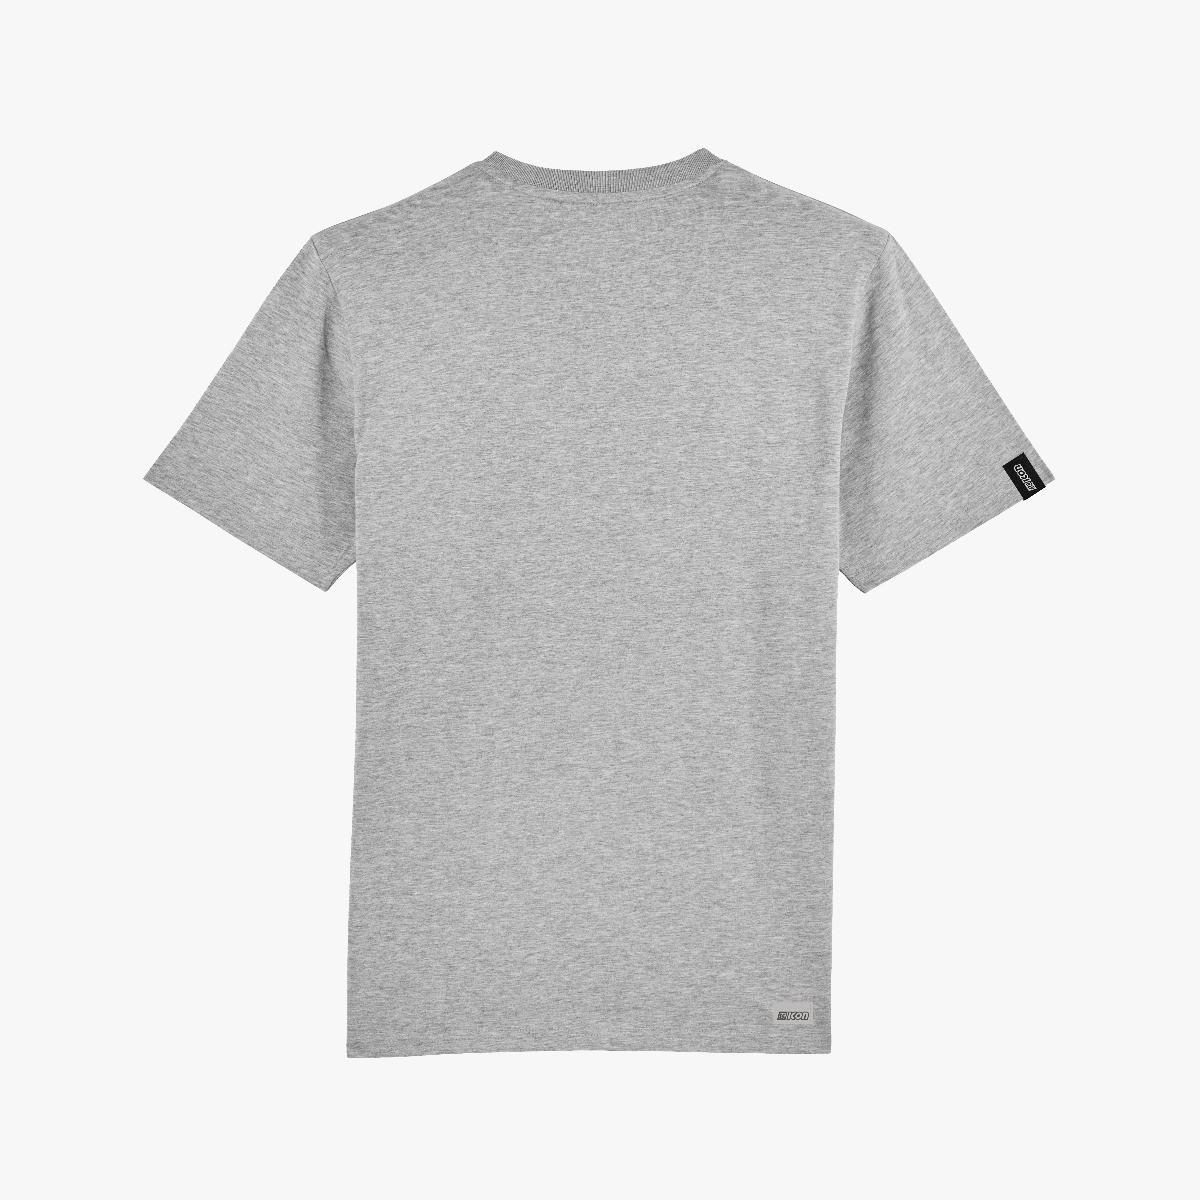 Scicon Sports | SC 1980 Logo Lifestyle Cotton T-shirt - Grey - TS61854